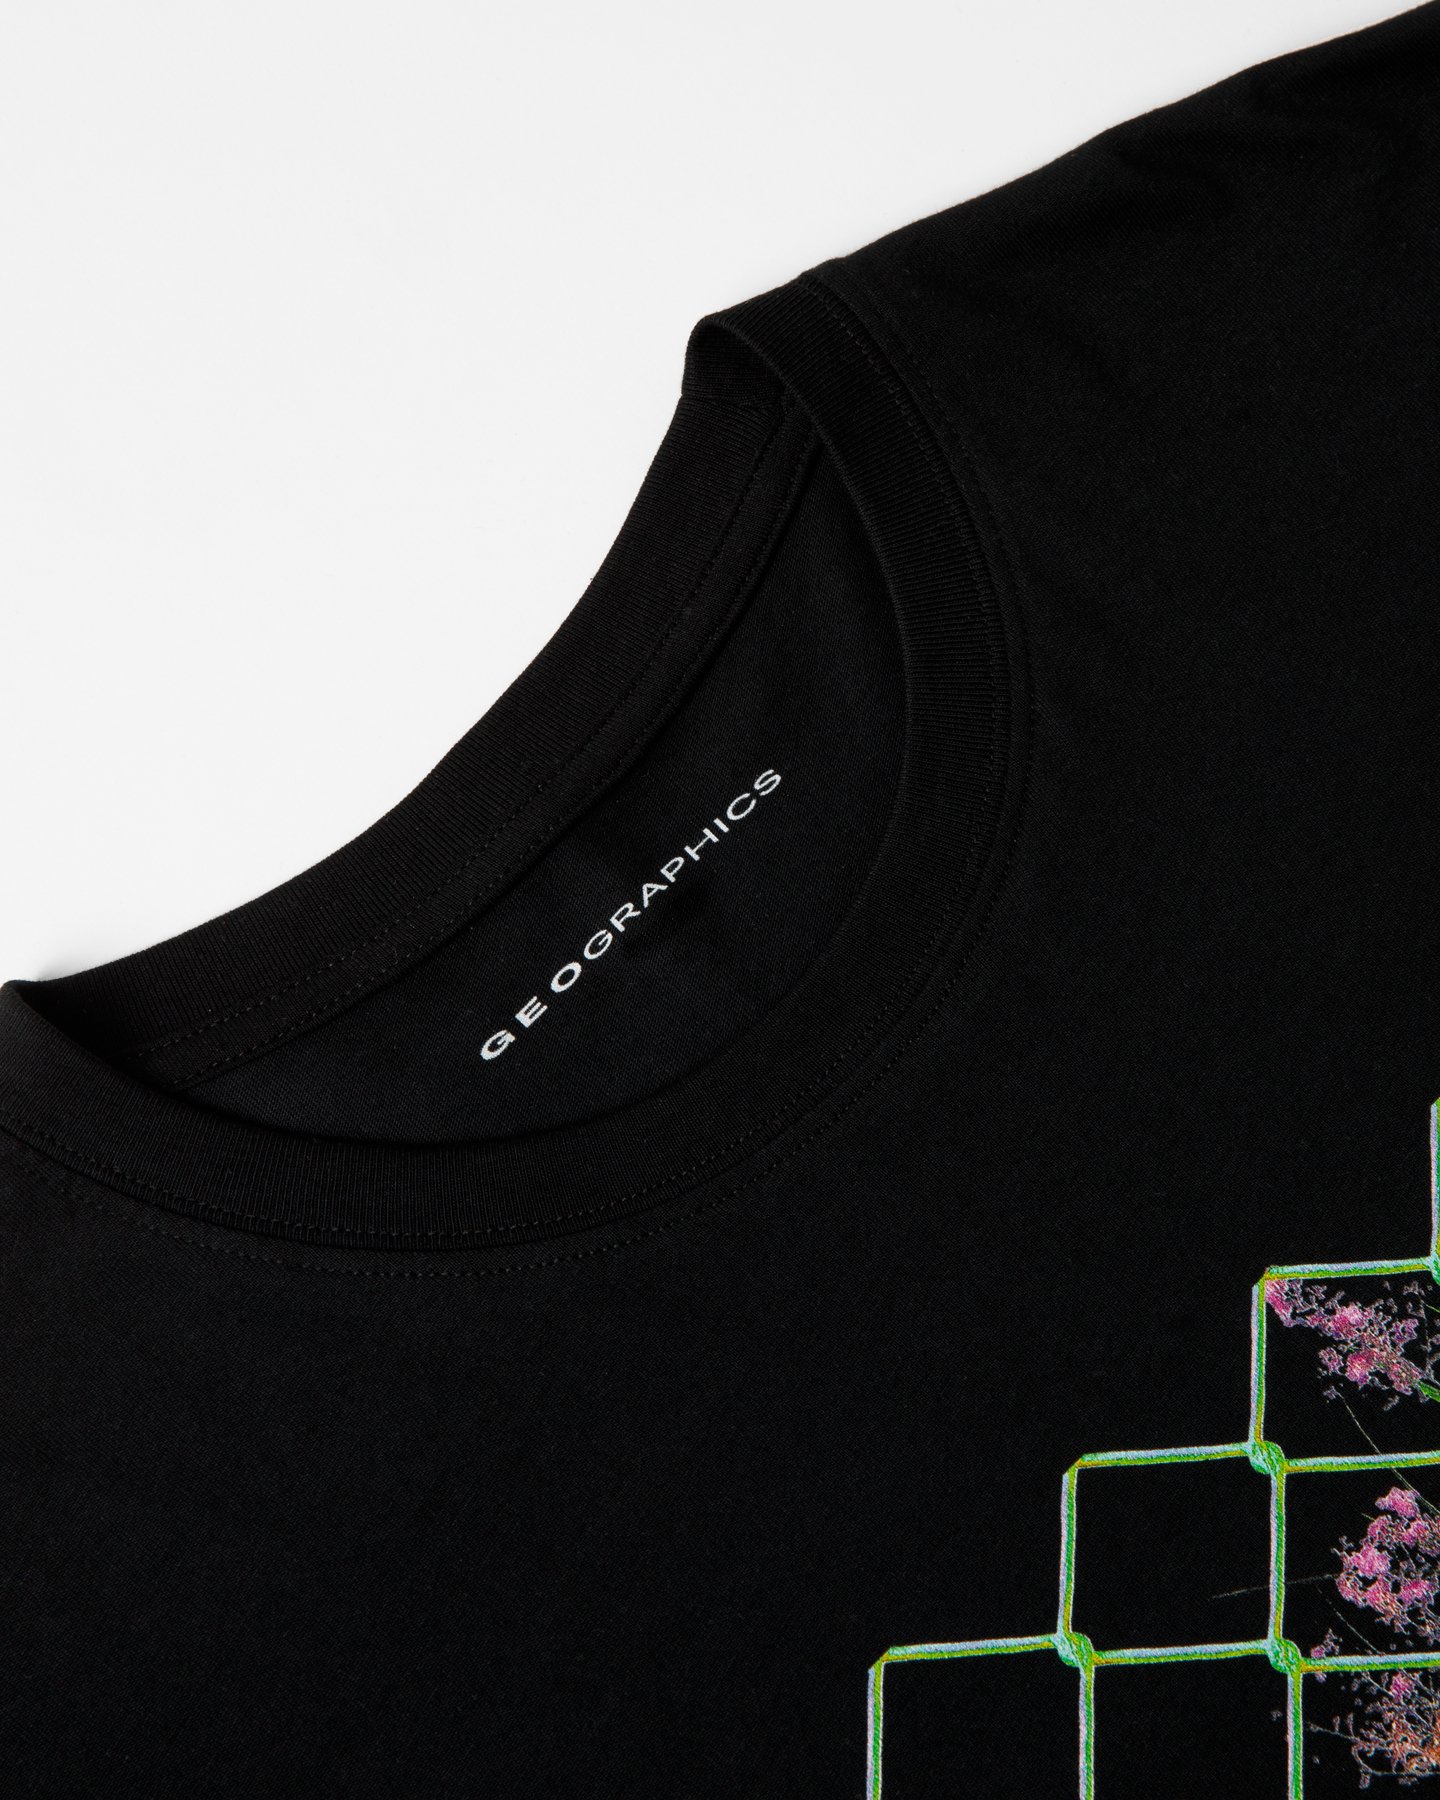 GEO - European Dream T-Shirt - Clothing - Black - Image 3